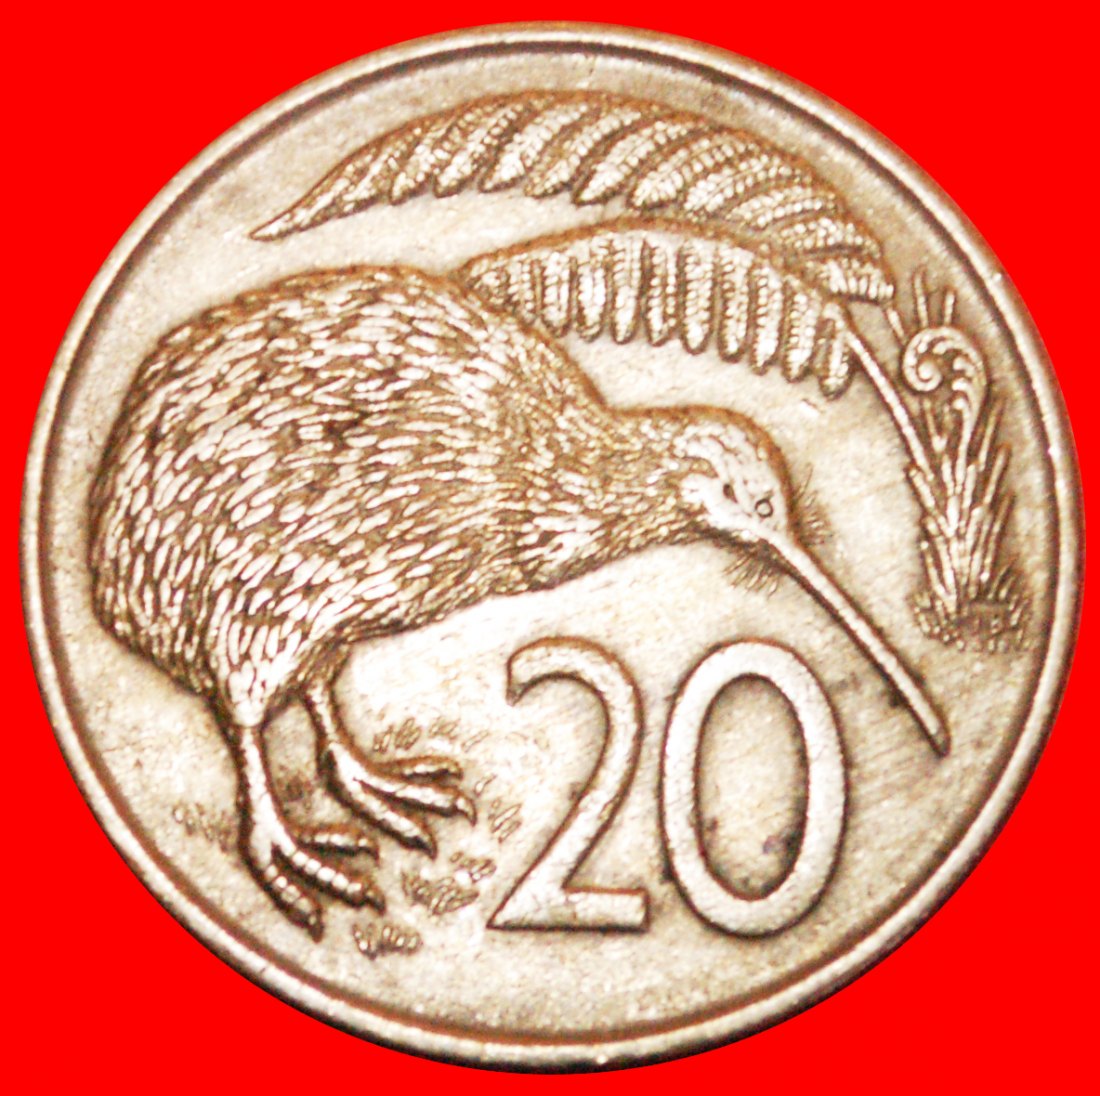  * GREAT BRITAIN: NEW ZEALAND ★ 20 CENTS 1967 KIWI BIRD! LOW START ★ NO RESERVE!   